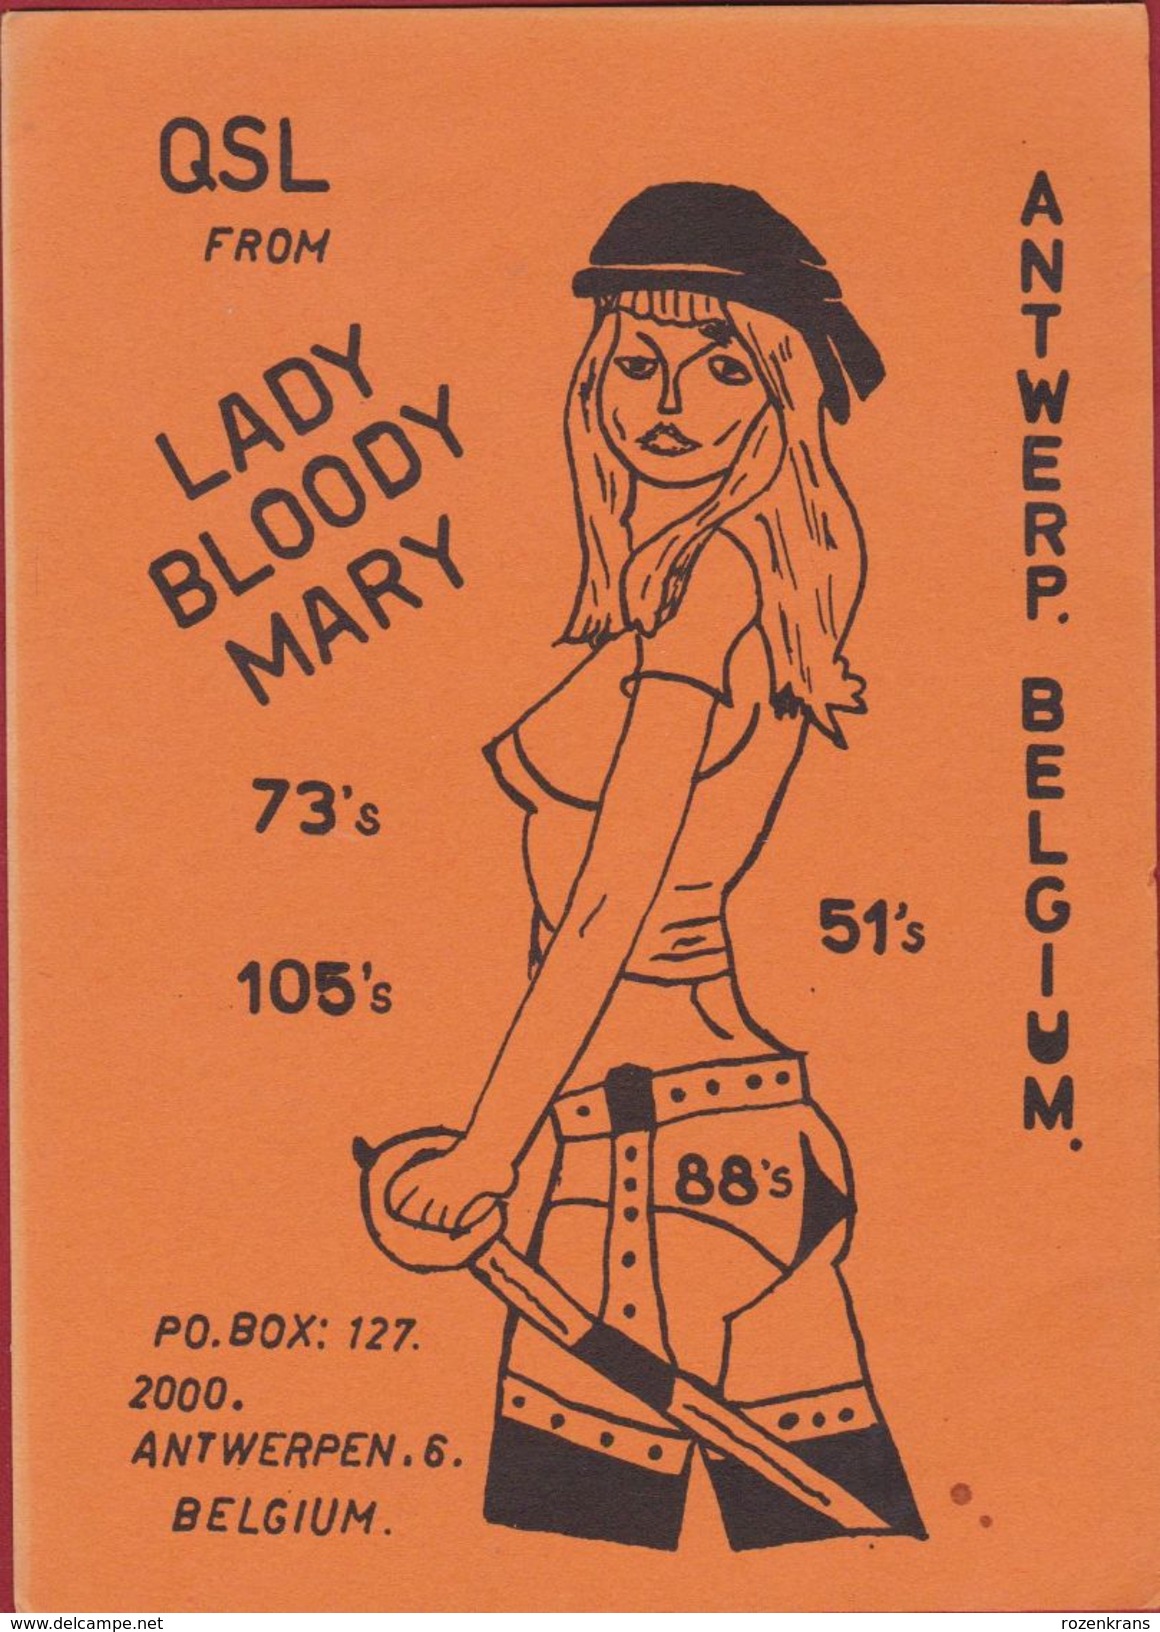 QSL Card Amateur Radio Station CB Belgium Antwerpen Pin Up 1981 Lady Bloody Mary - Radio Amateur